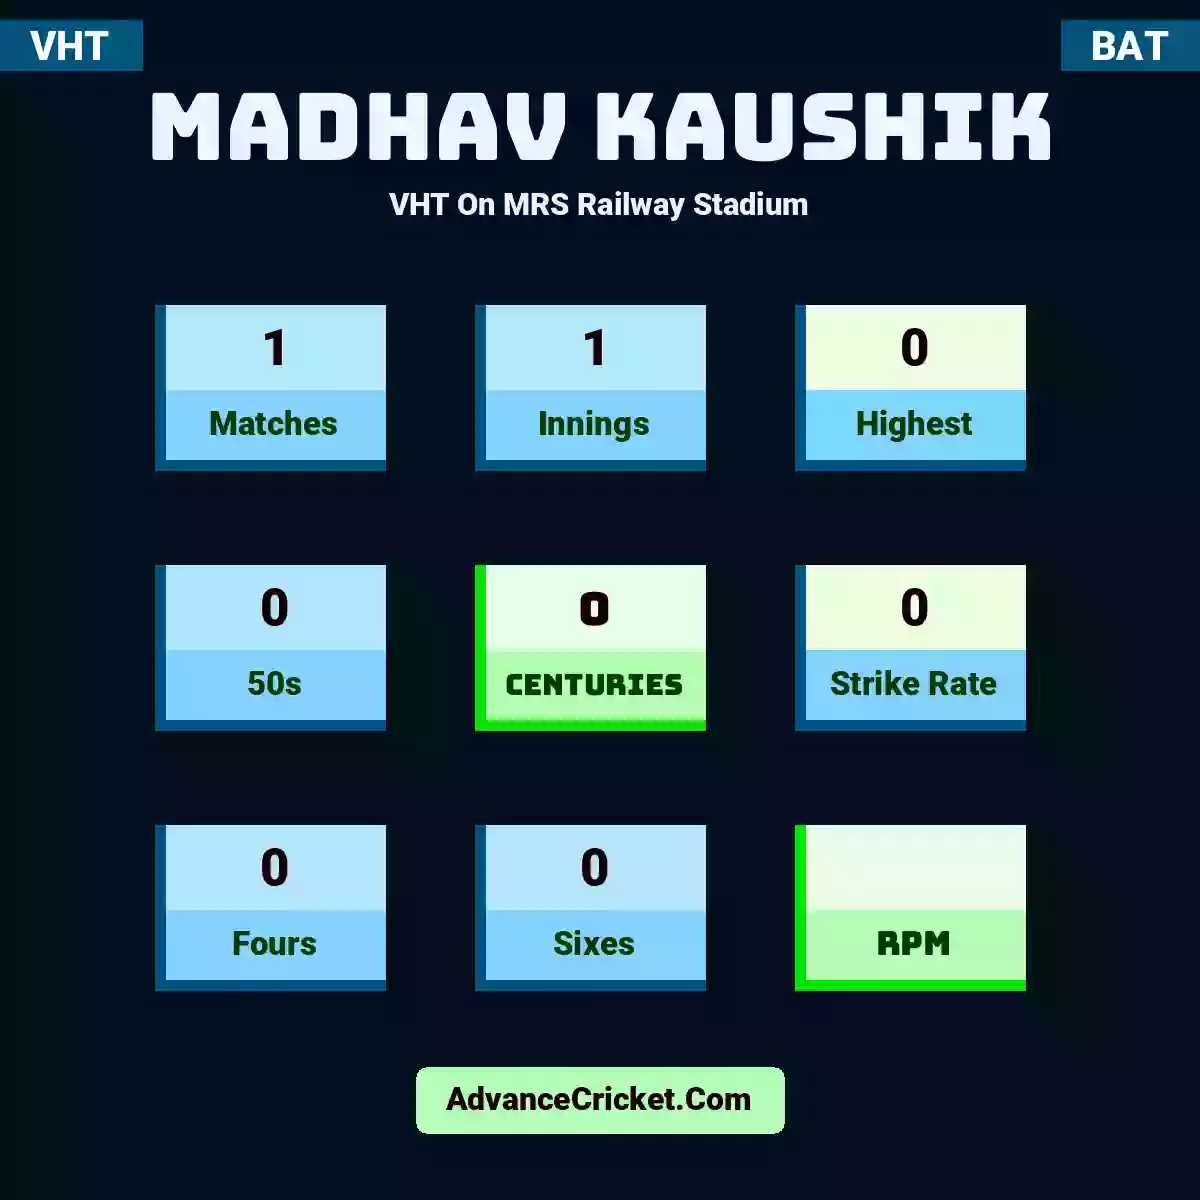 Madhav Kaushik VHT  On MRS Railway Stadium, Madhav Kaushik played 1 matches, scored 0 runs as highest, 0 half-centuries, and 0 centuries, with a strike rate of 0. M.Kaushik hit 0 fours and 0 sixes.